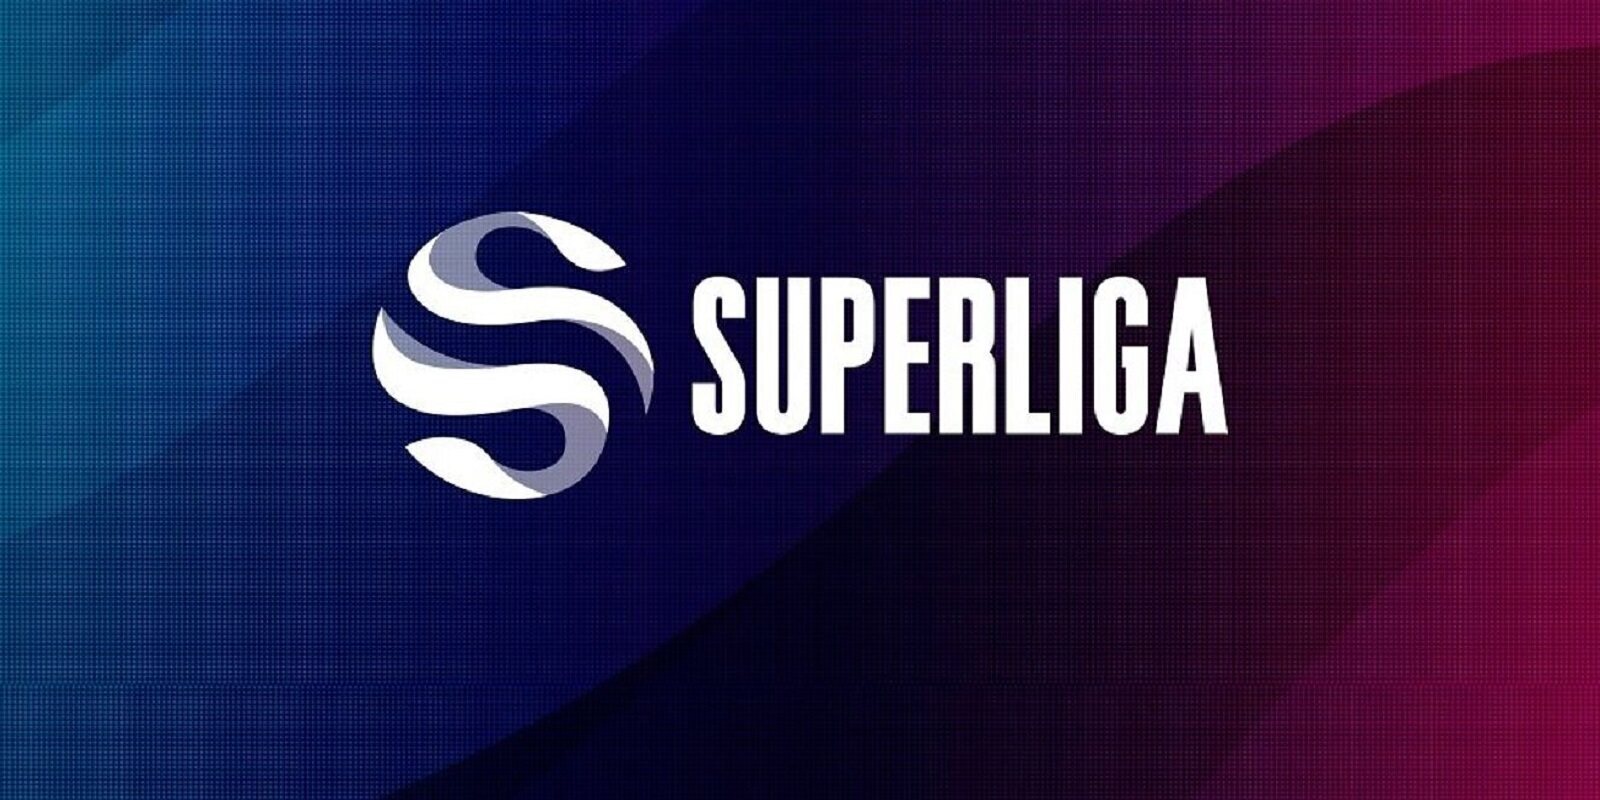 KOI vuelve a caer derrotado en la Jornada 2 de la Superliga de 'League of Legends'